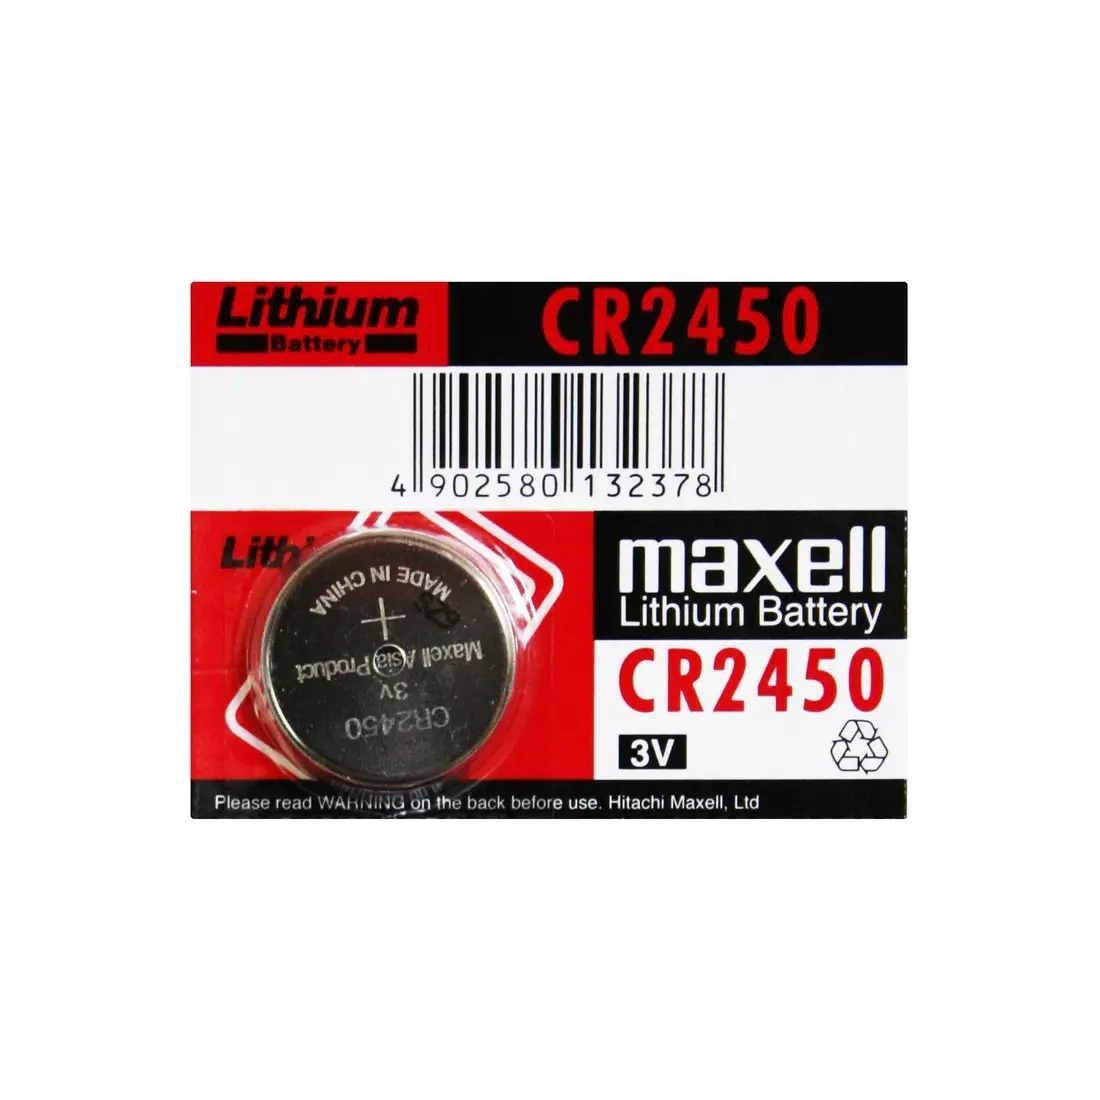 Maxell Battery CR2450, MAX2450